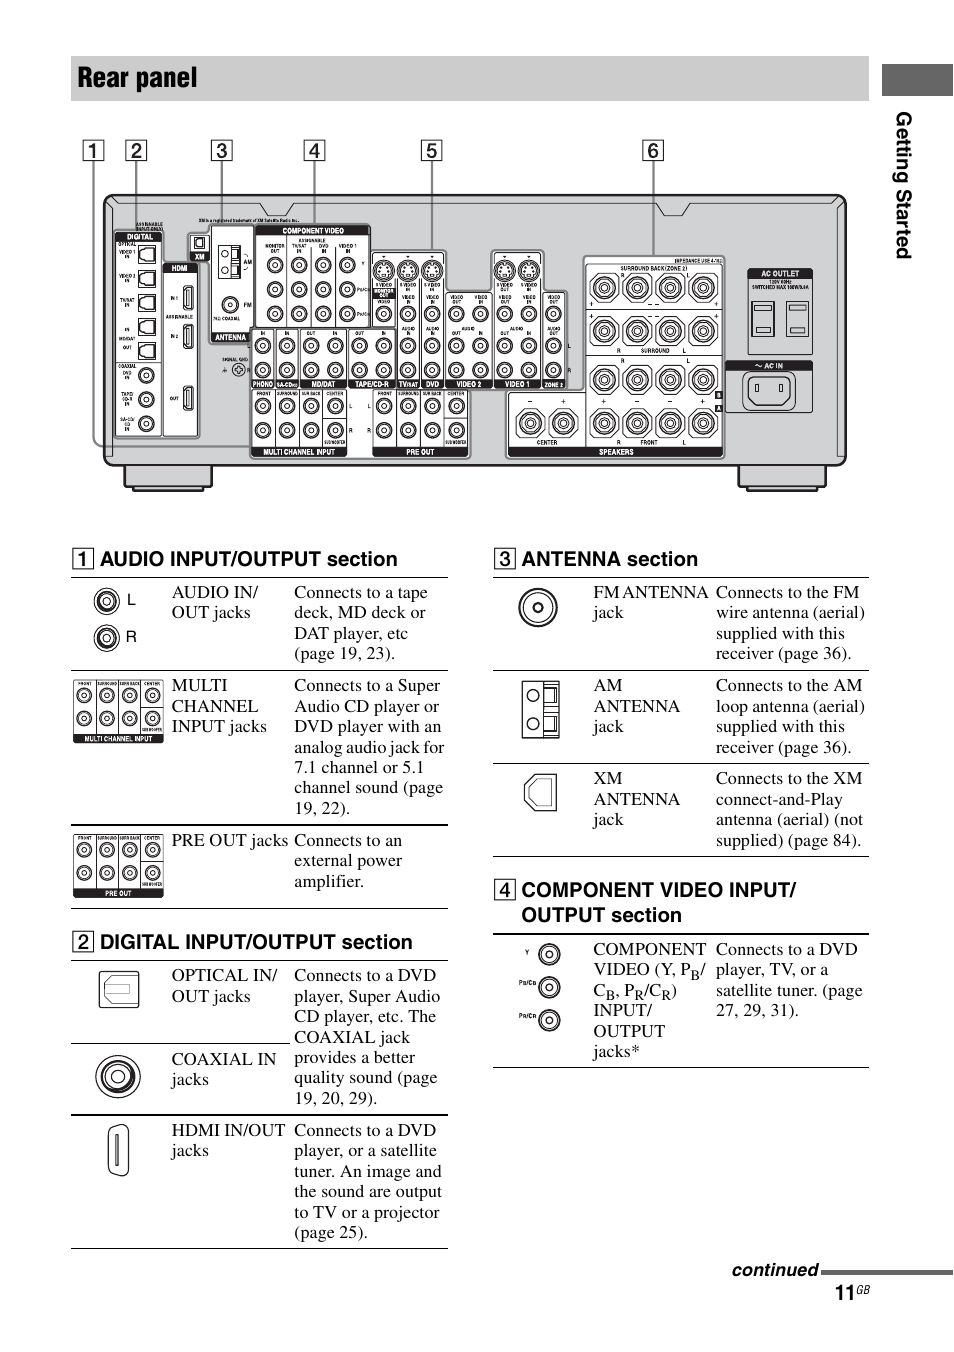 Rear panel | Sony STR-DG1000 User Manual | Page 11 / 123